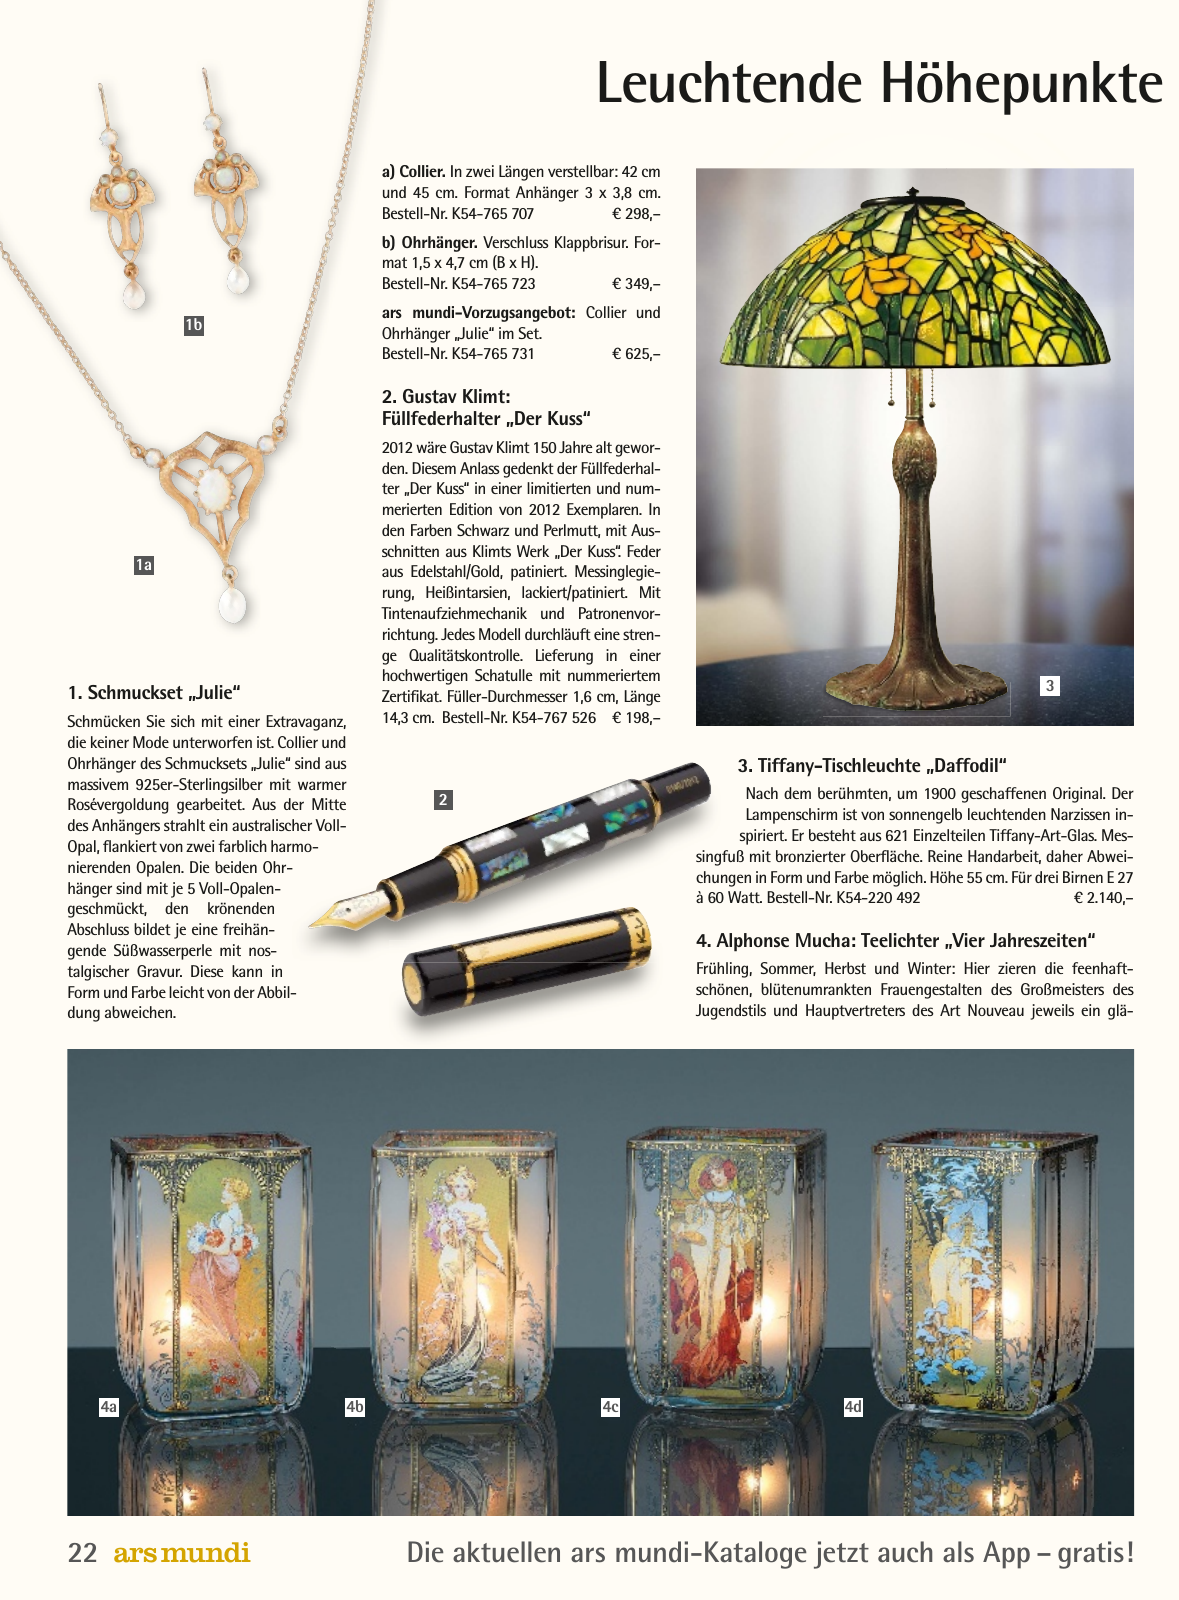 Vorschau Katalog Highlight 2014 Seite 22